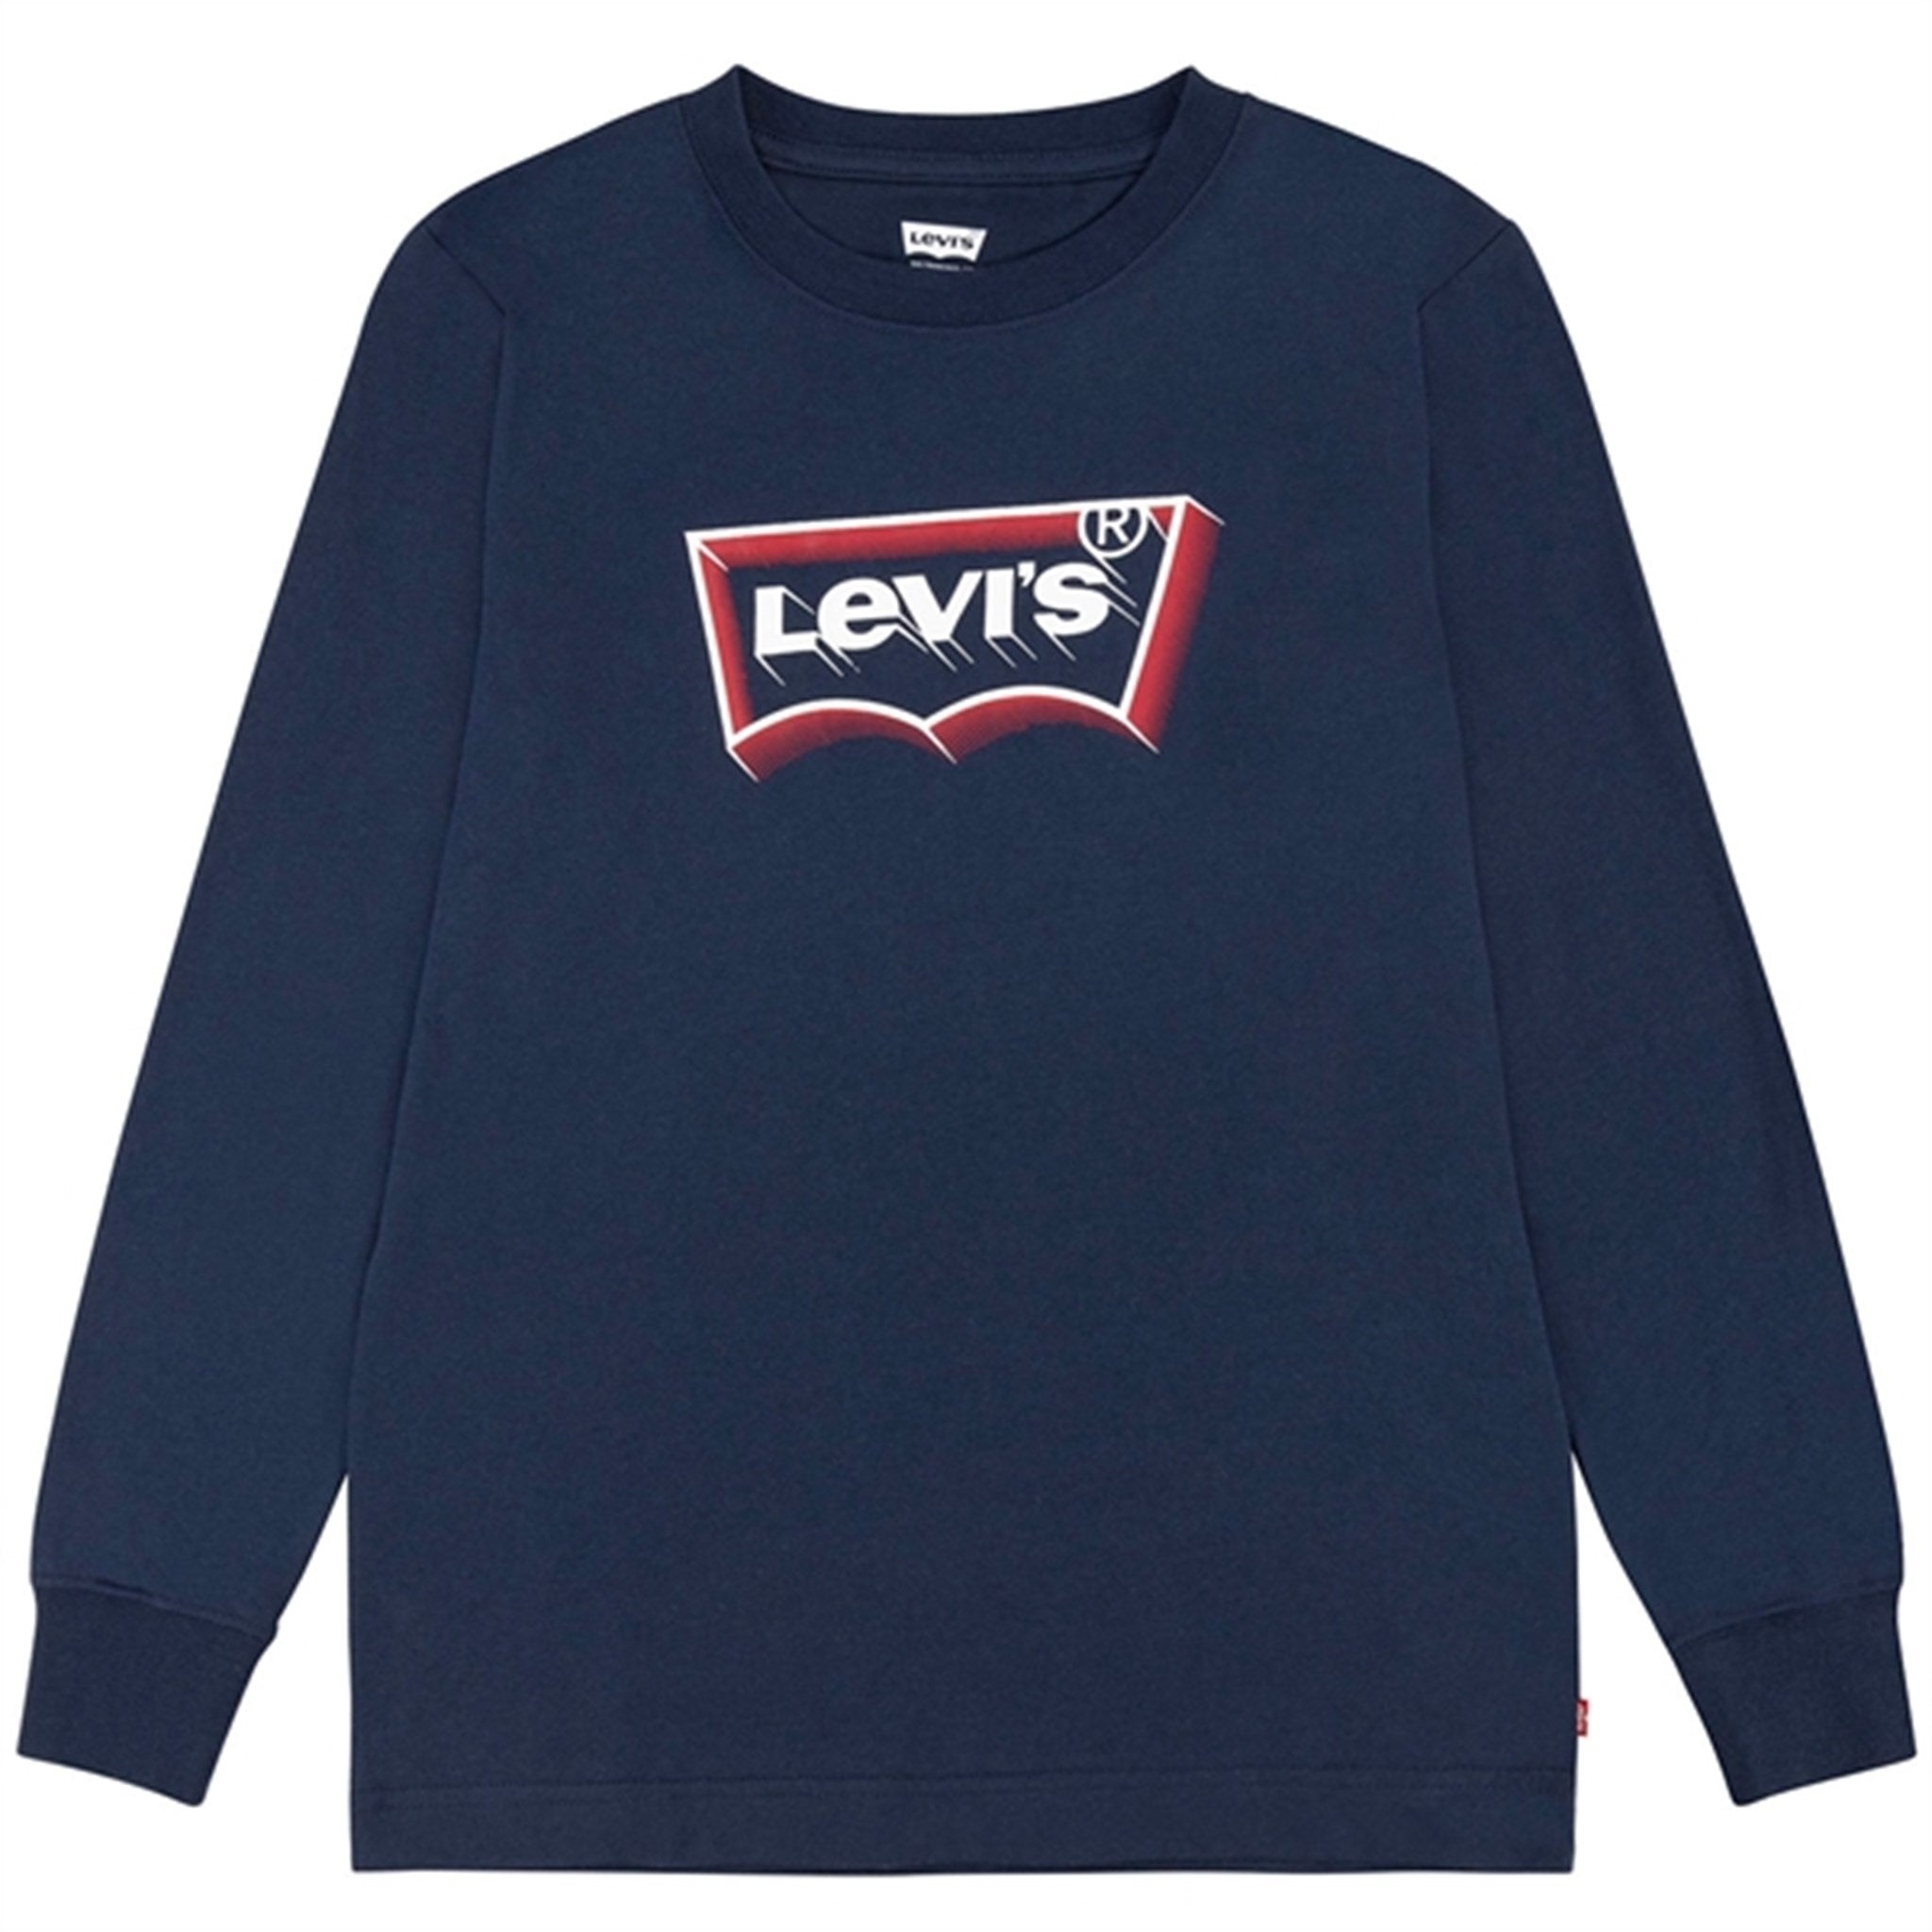 Levi's Baby Glow Effect Batwing Long Sleeve T-Shirt Dress Blues